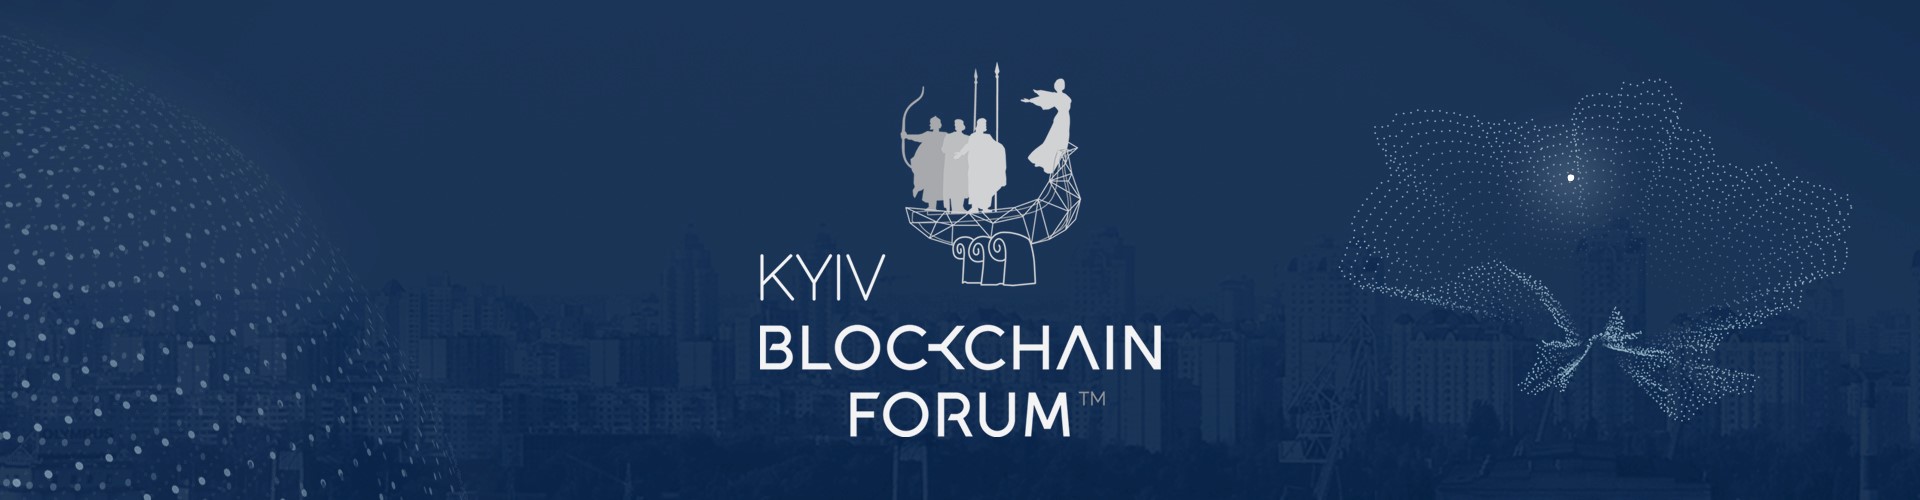 Kyiv Blockchain Forum 2018